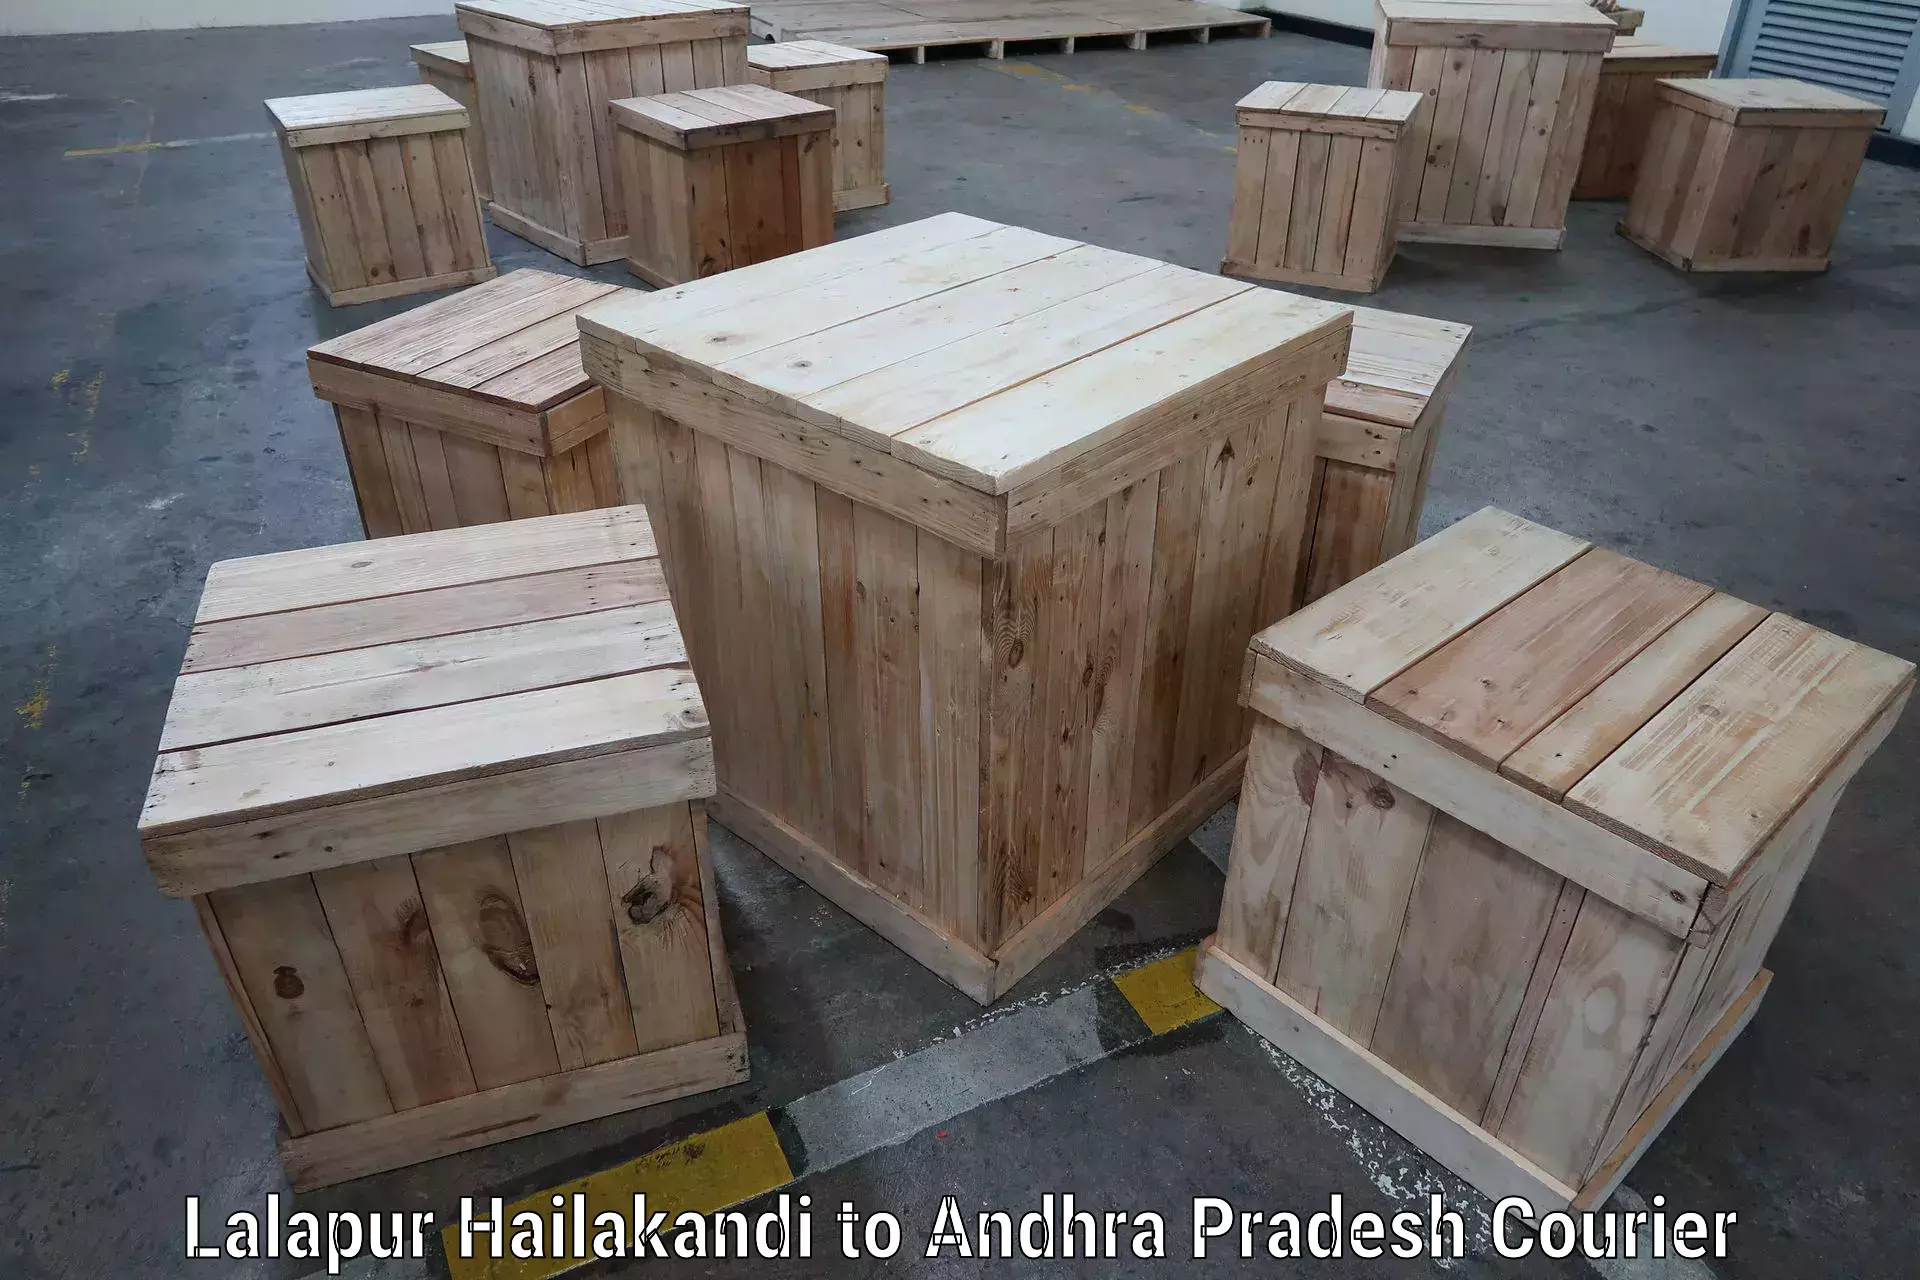 Advanced courier platforms Lalapur Hailakandi to Gudivada